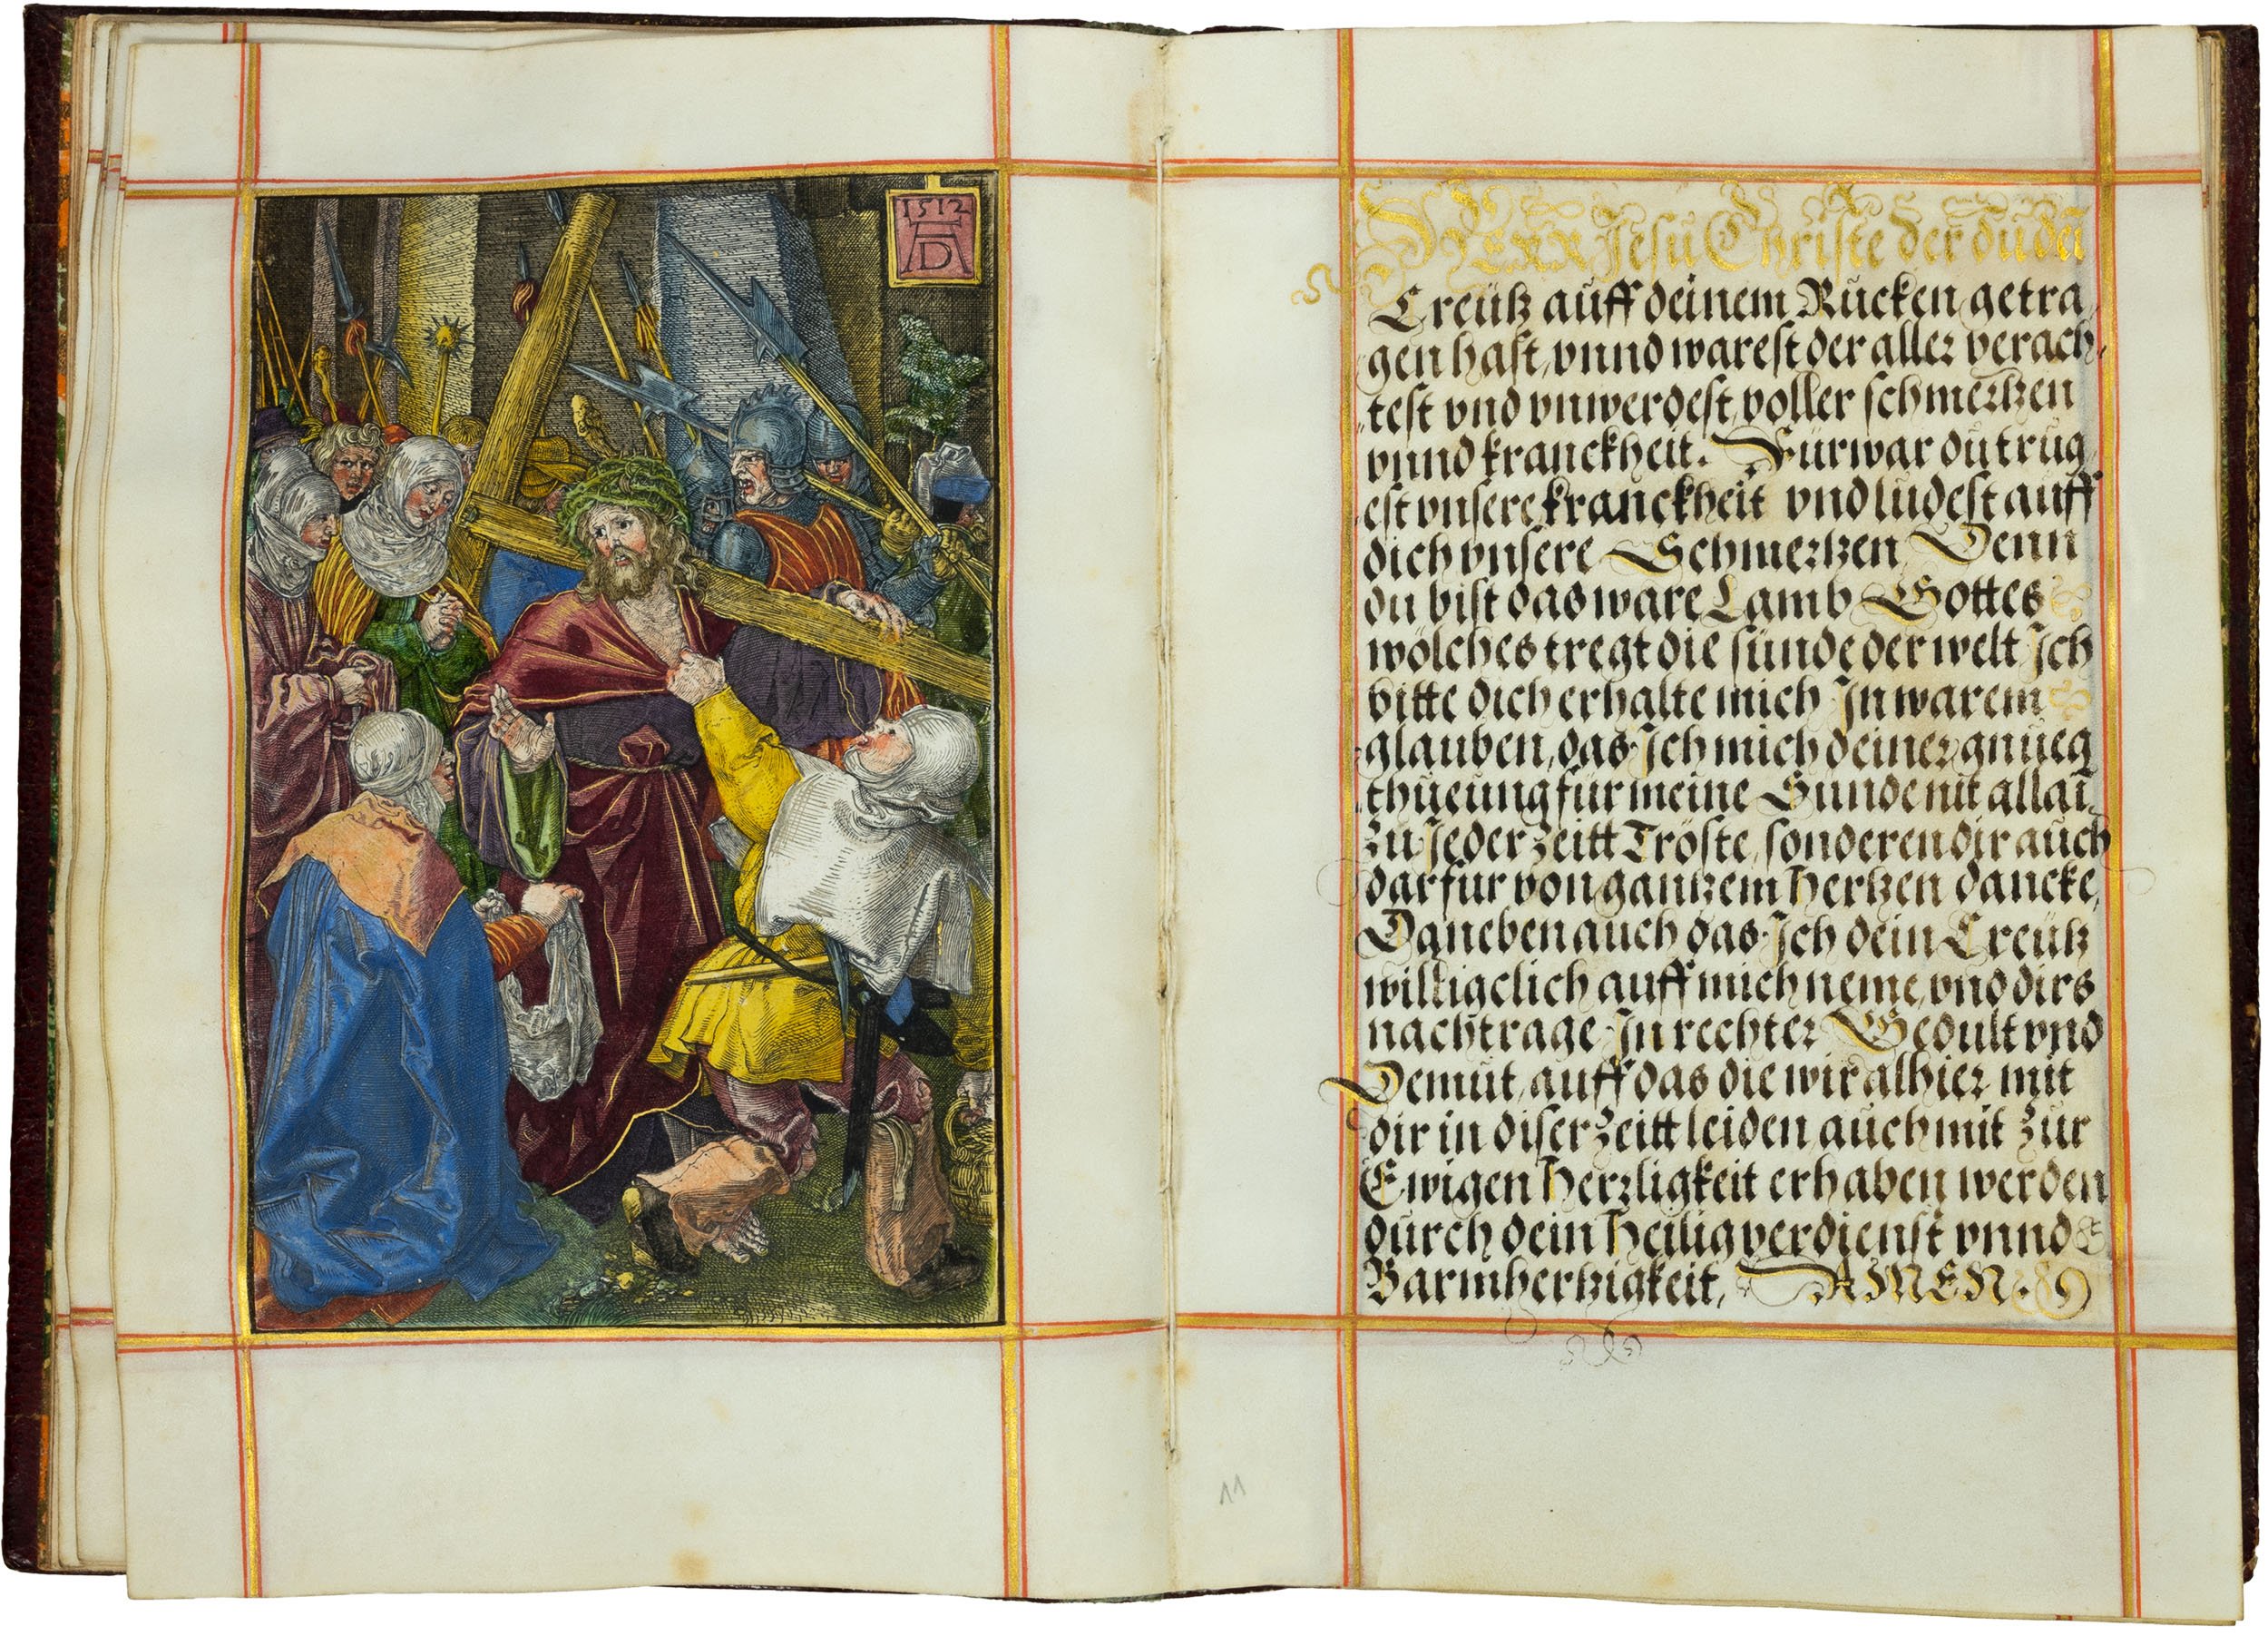 duerer-engraved-passion-kupferstich-passion-oertl-german-manuscript-vellum-1587-illuminated-12.jpg